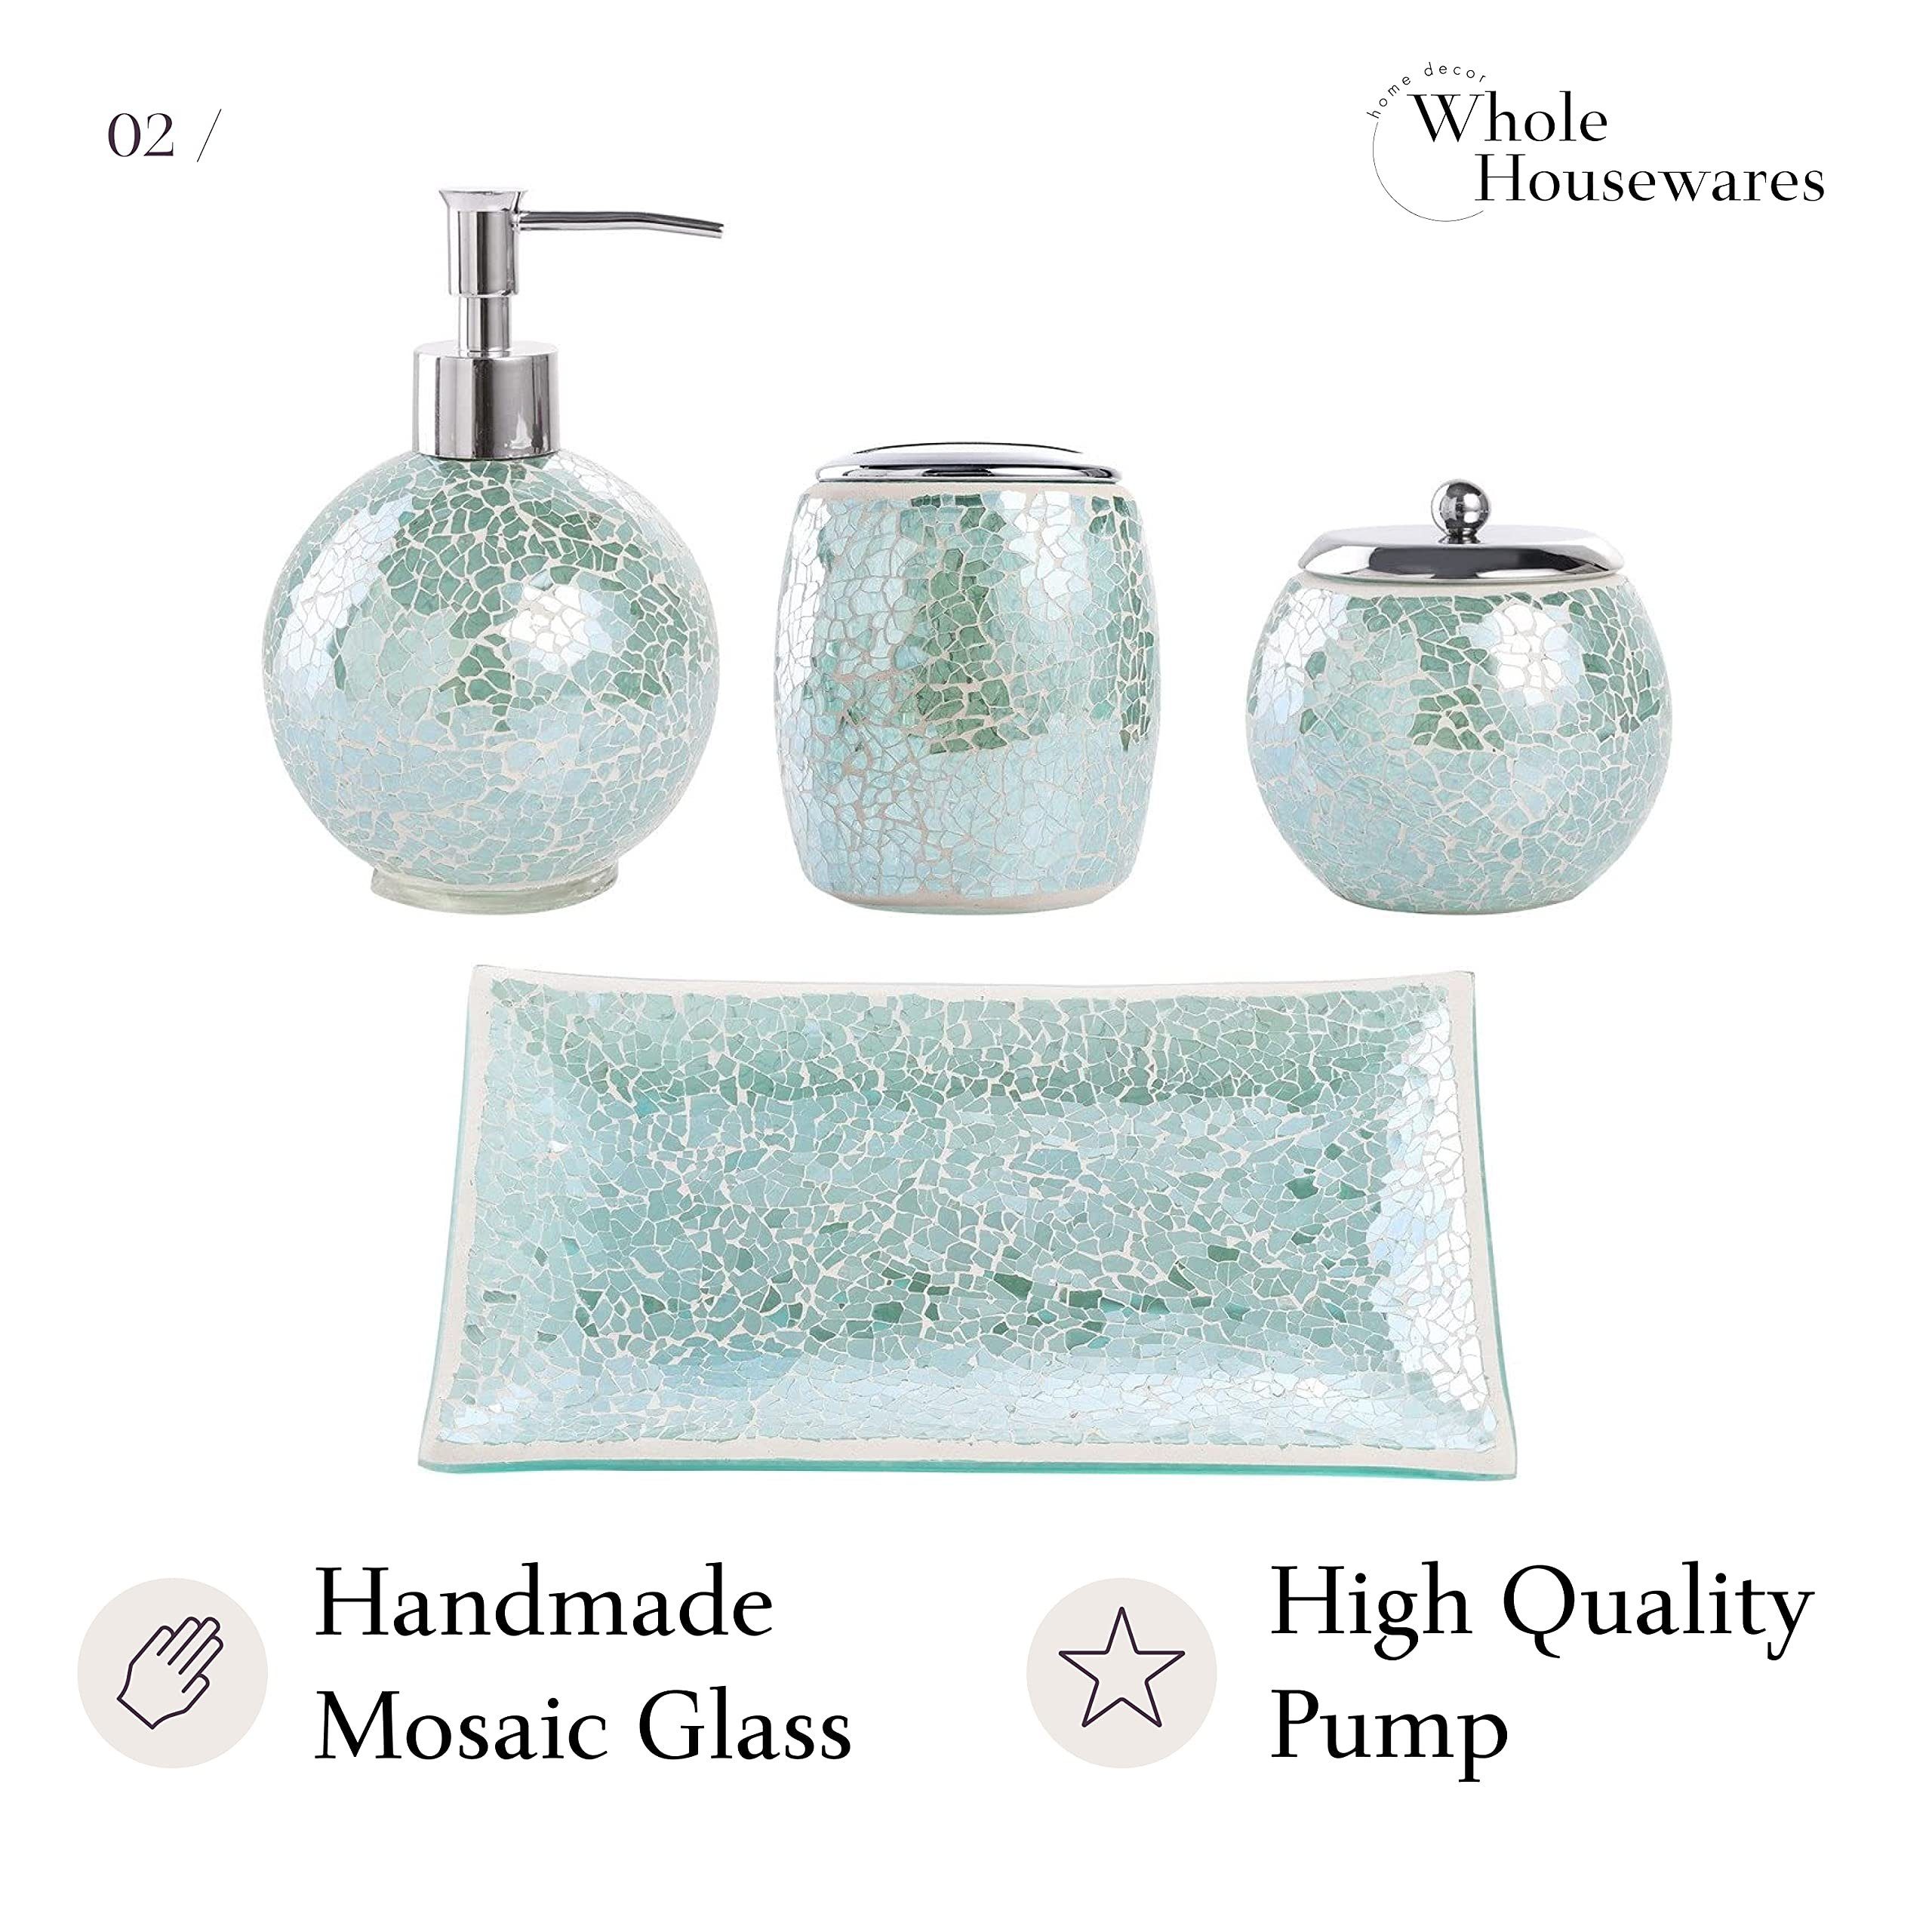 teiliges tlg. Mosaikglas-Badezimmer-Accessoir-Set, 5 4er-Setmodernglas, Türkis Housewares Whole 4 Badaccessoire-Set